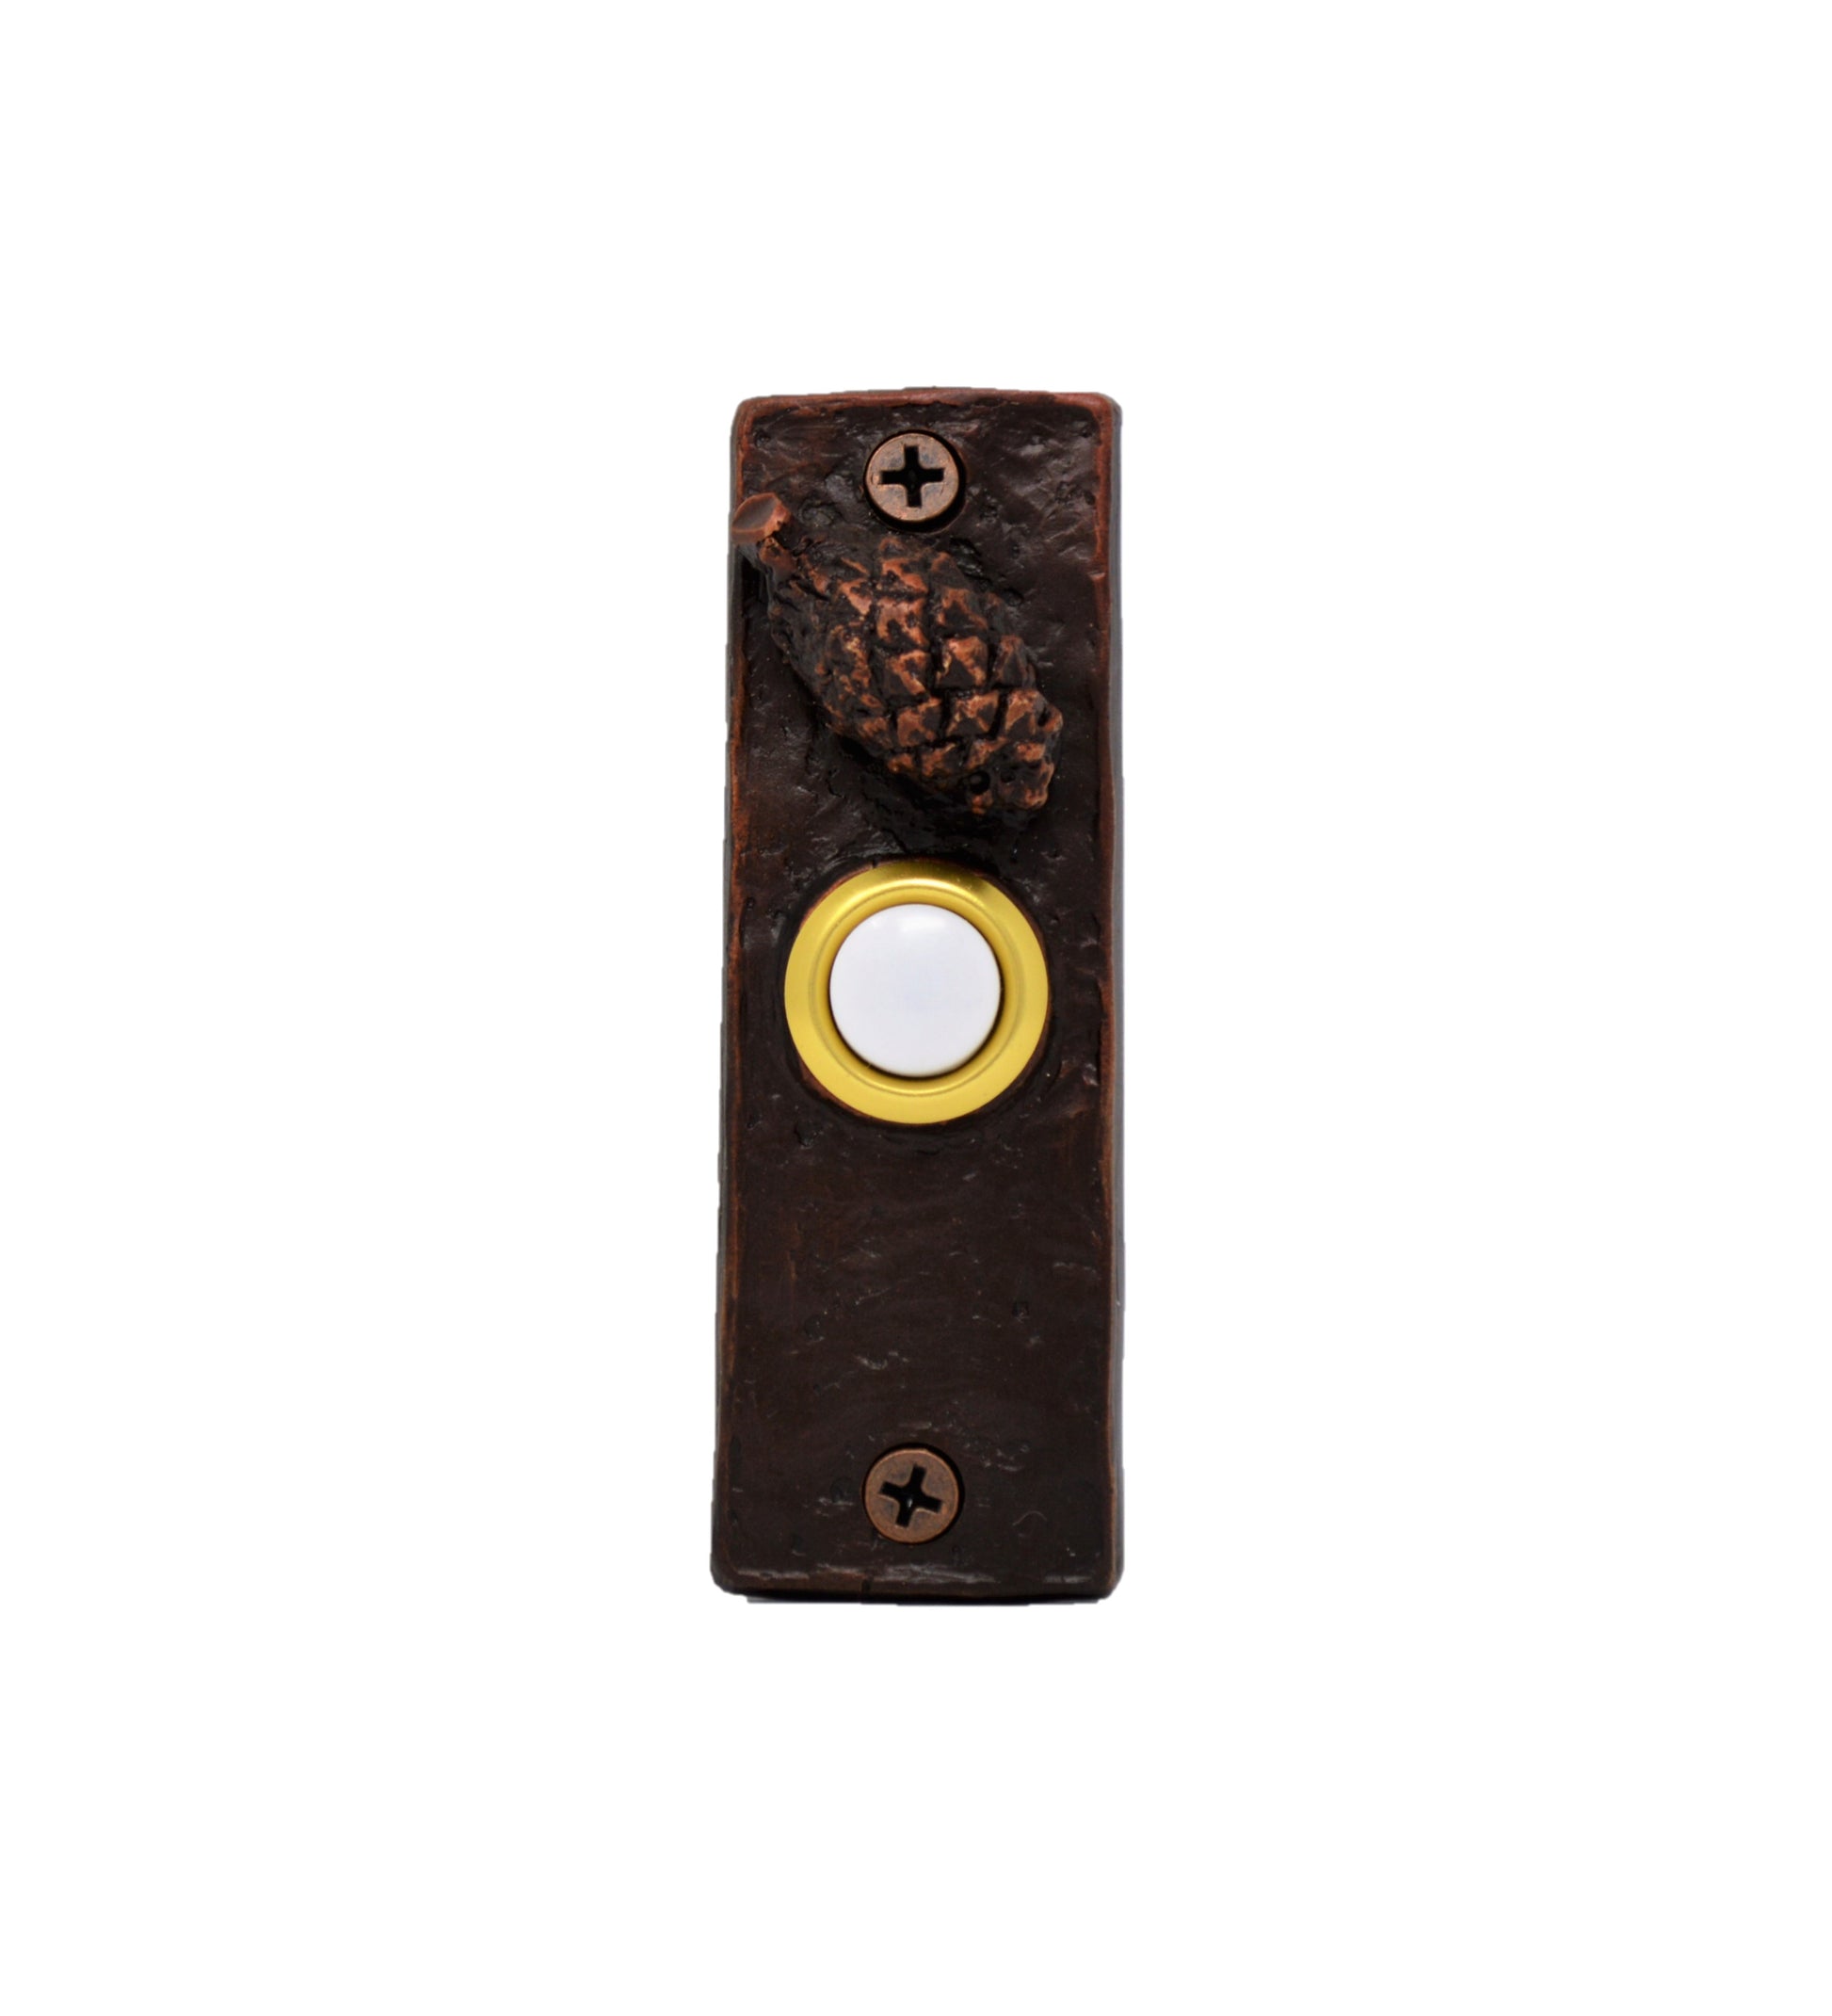 Slim bronze doorbell with Lodgepole pine cone - traditional patina